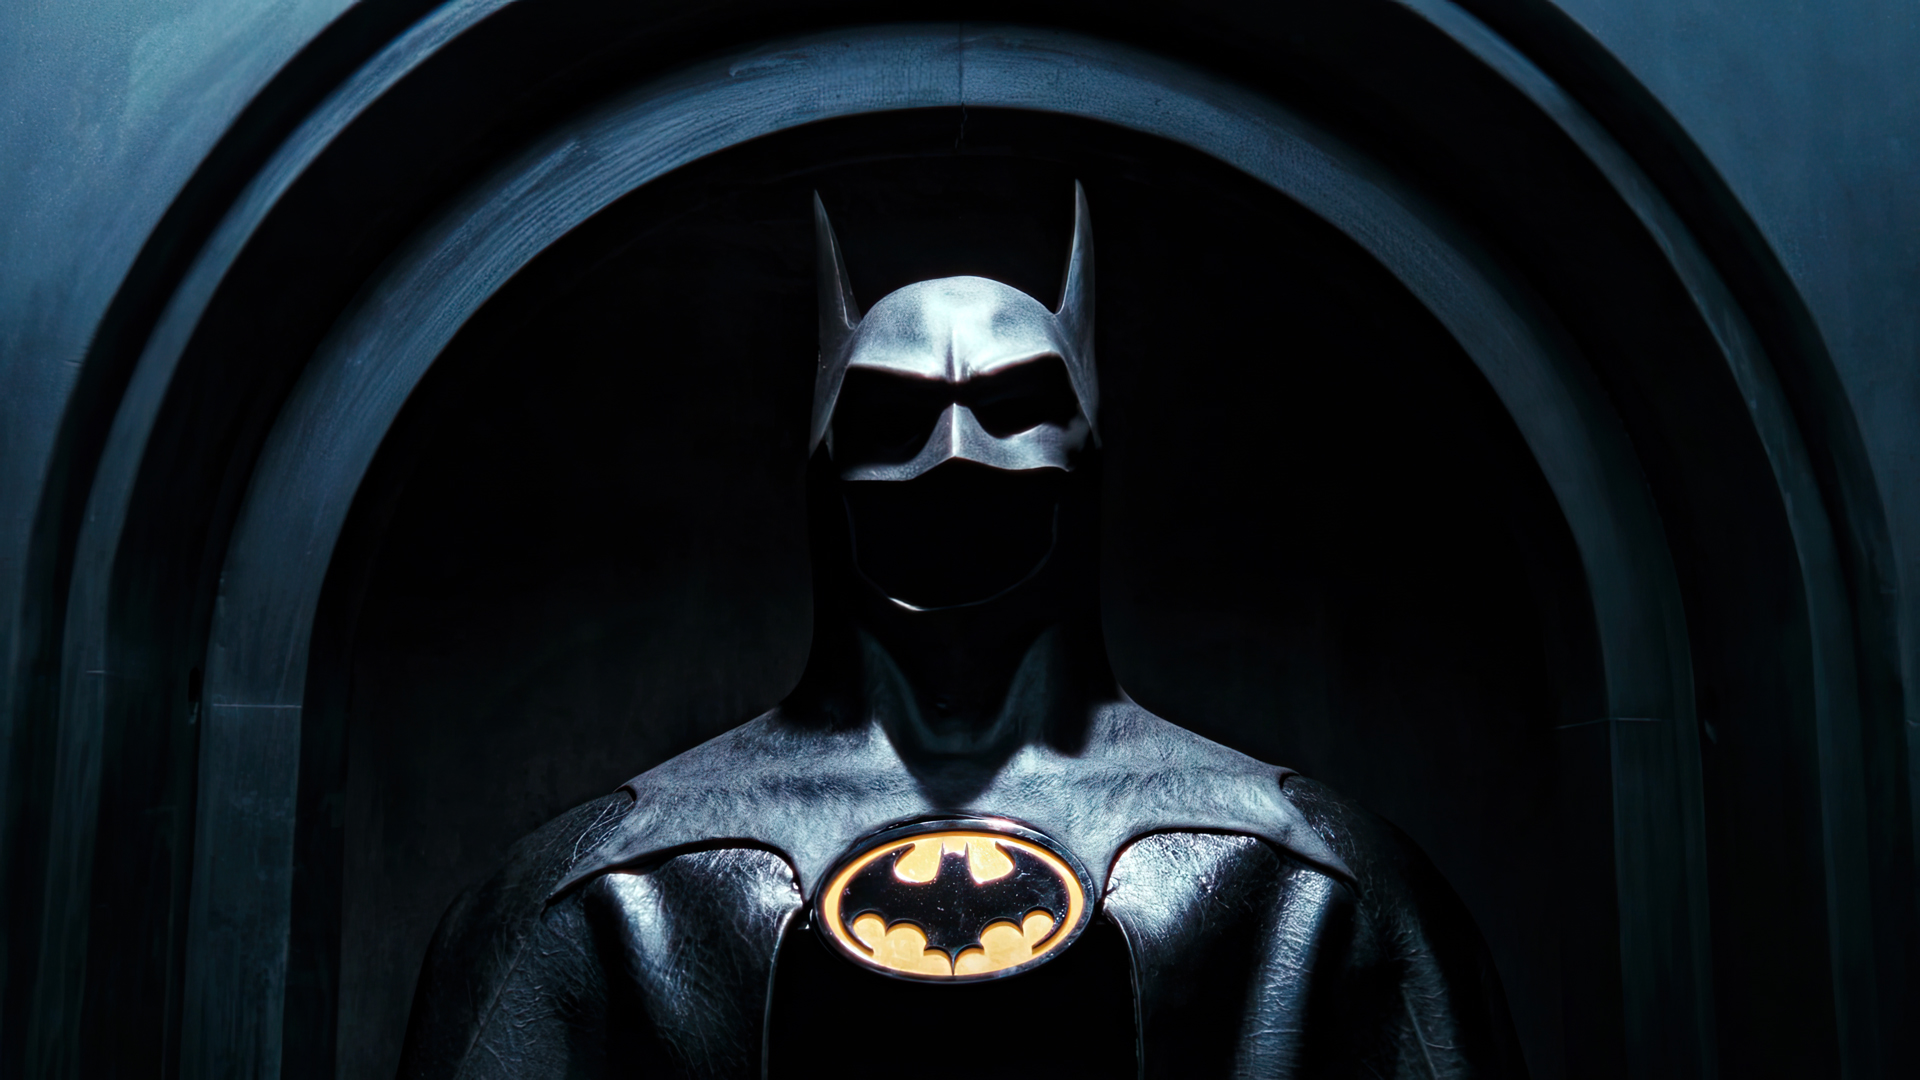 General 1920x1080 Batman batsuit movies film stills Batman logo superhero logo